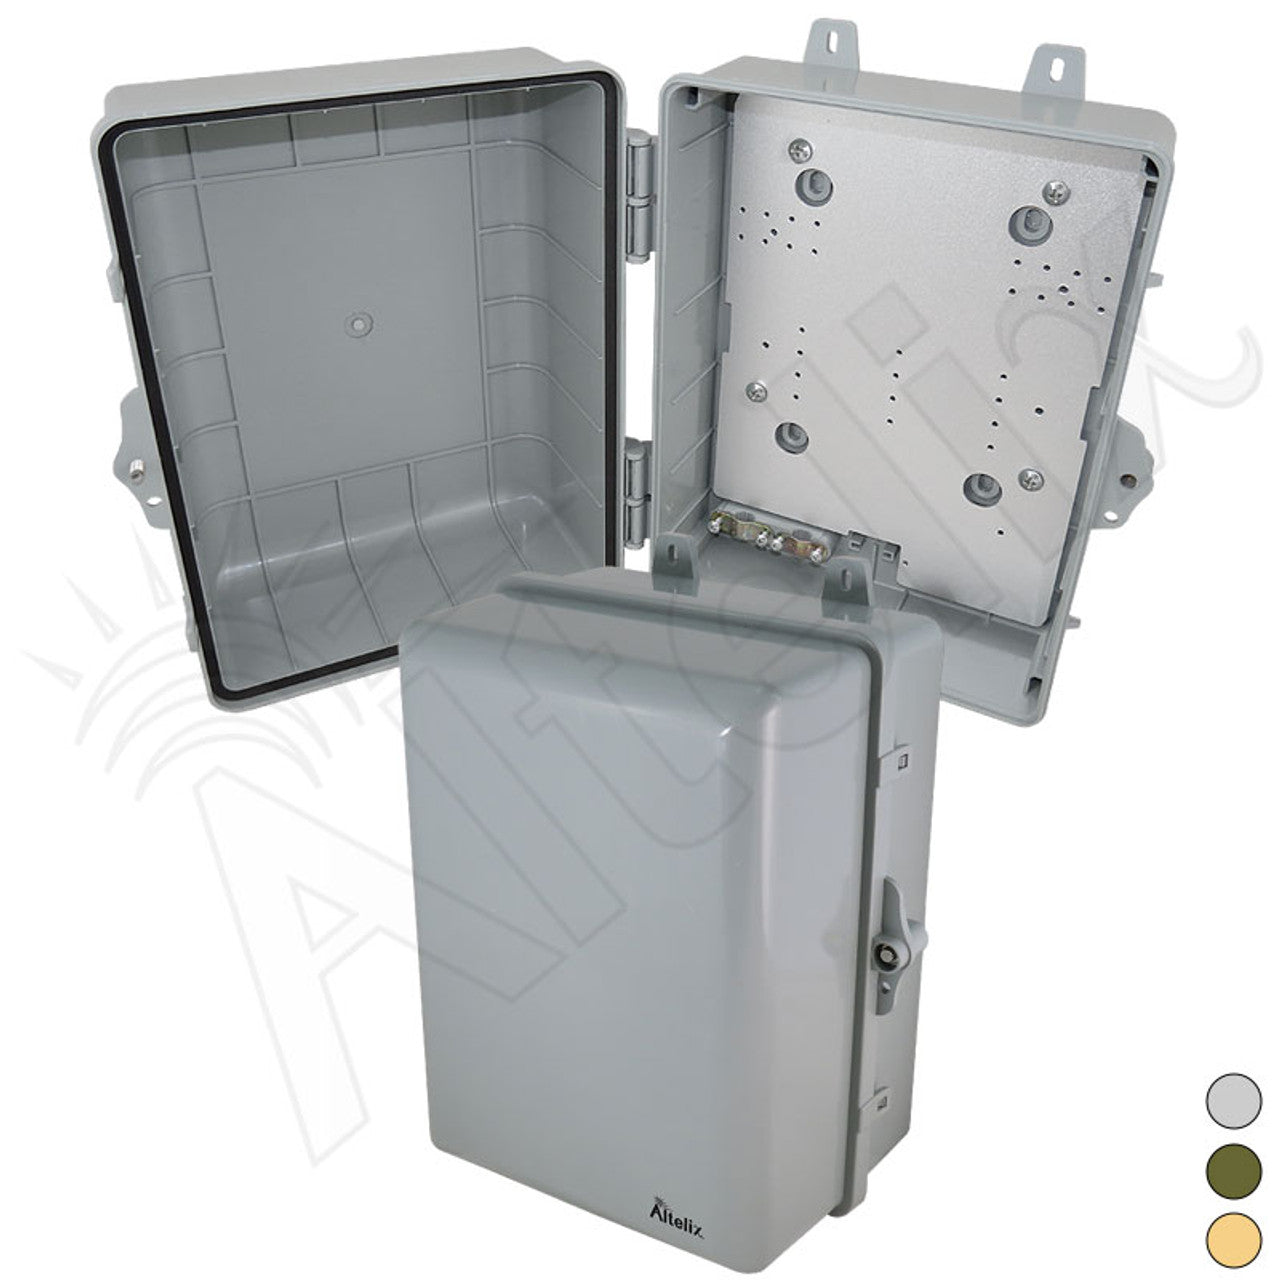 Altelix 12x9x7 IP66 NEMA 4X PC+ABS Weatherproof Utility Box with Hinged Door and Aluminum Mounting Plate - 0